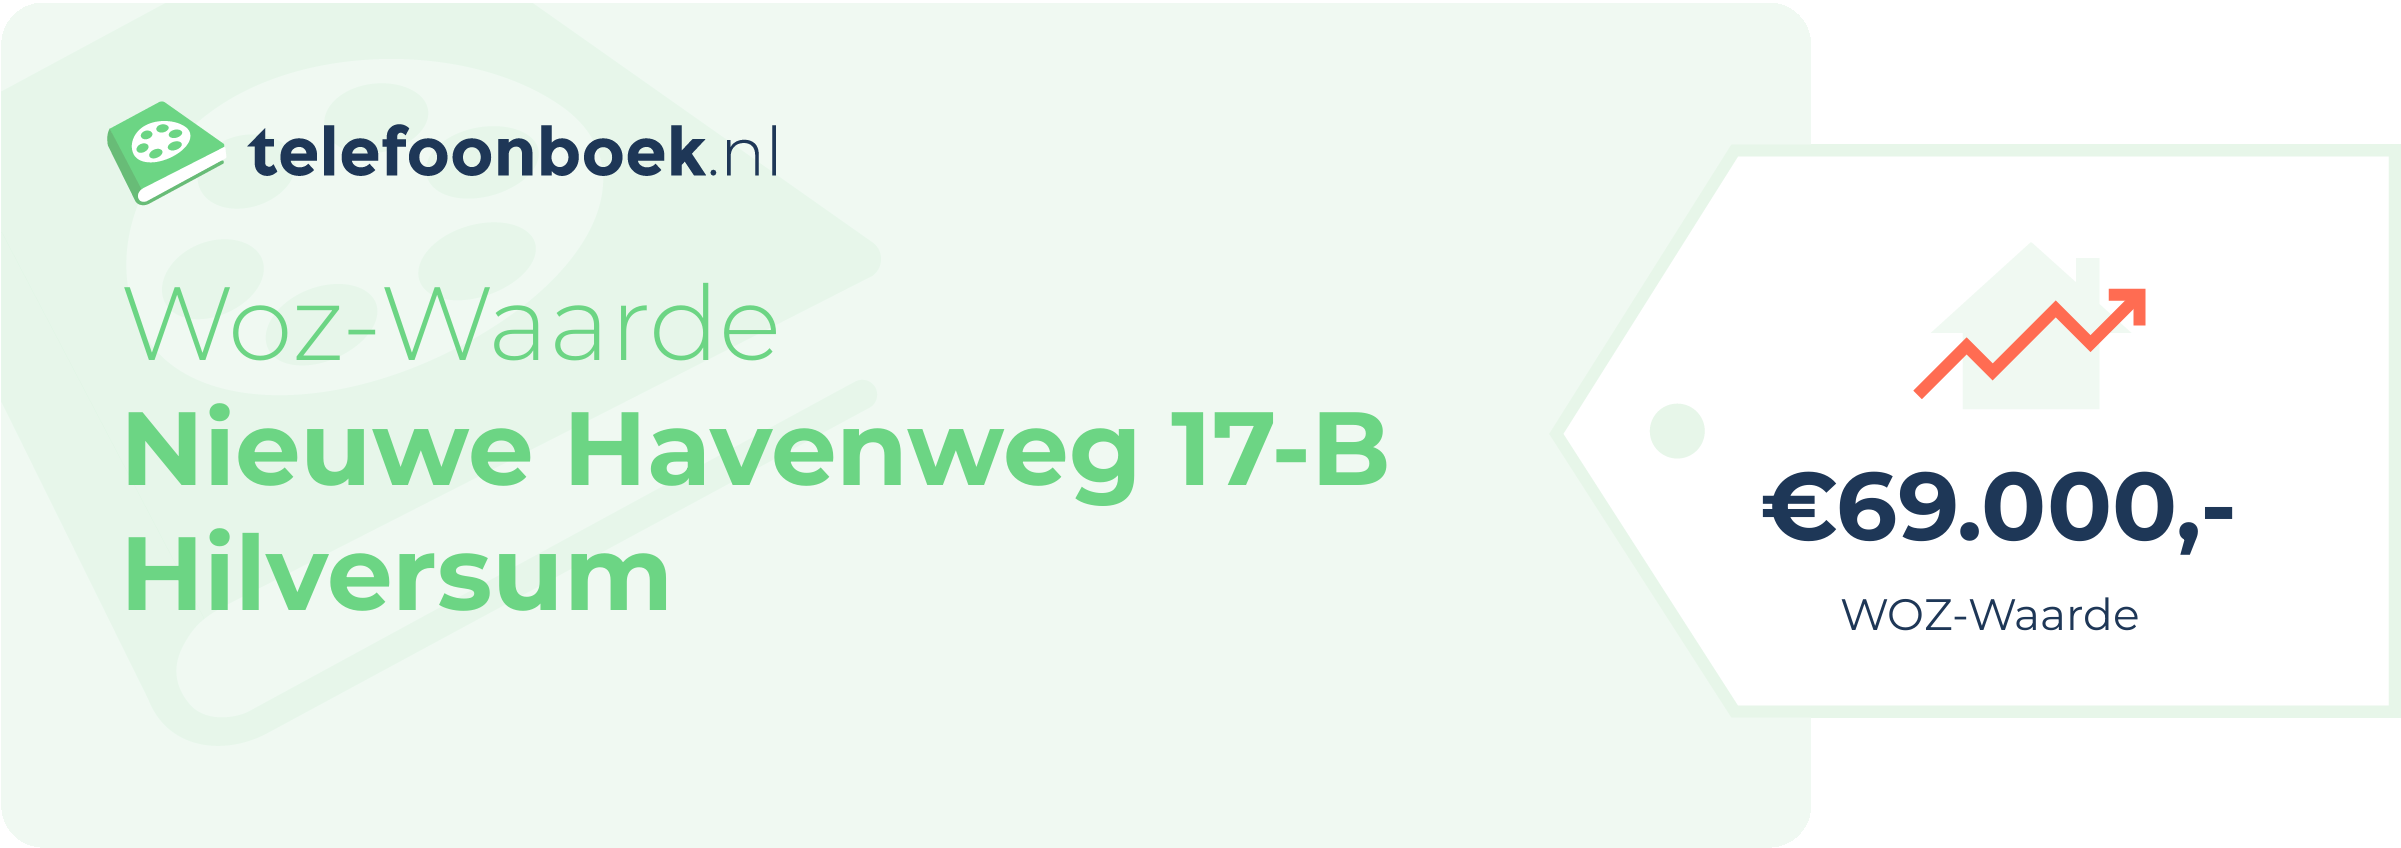 WOZ-waarde Nieuwe Havenweg 17-B Hilversum